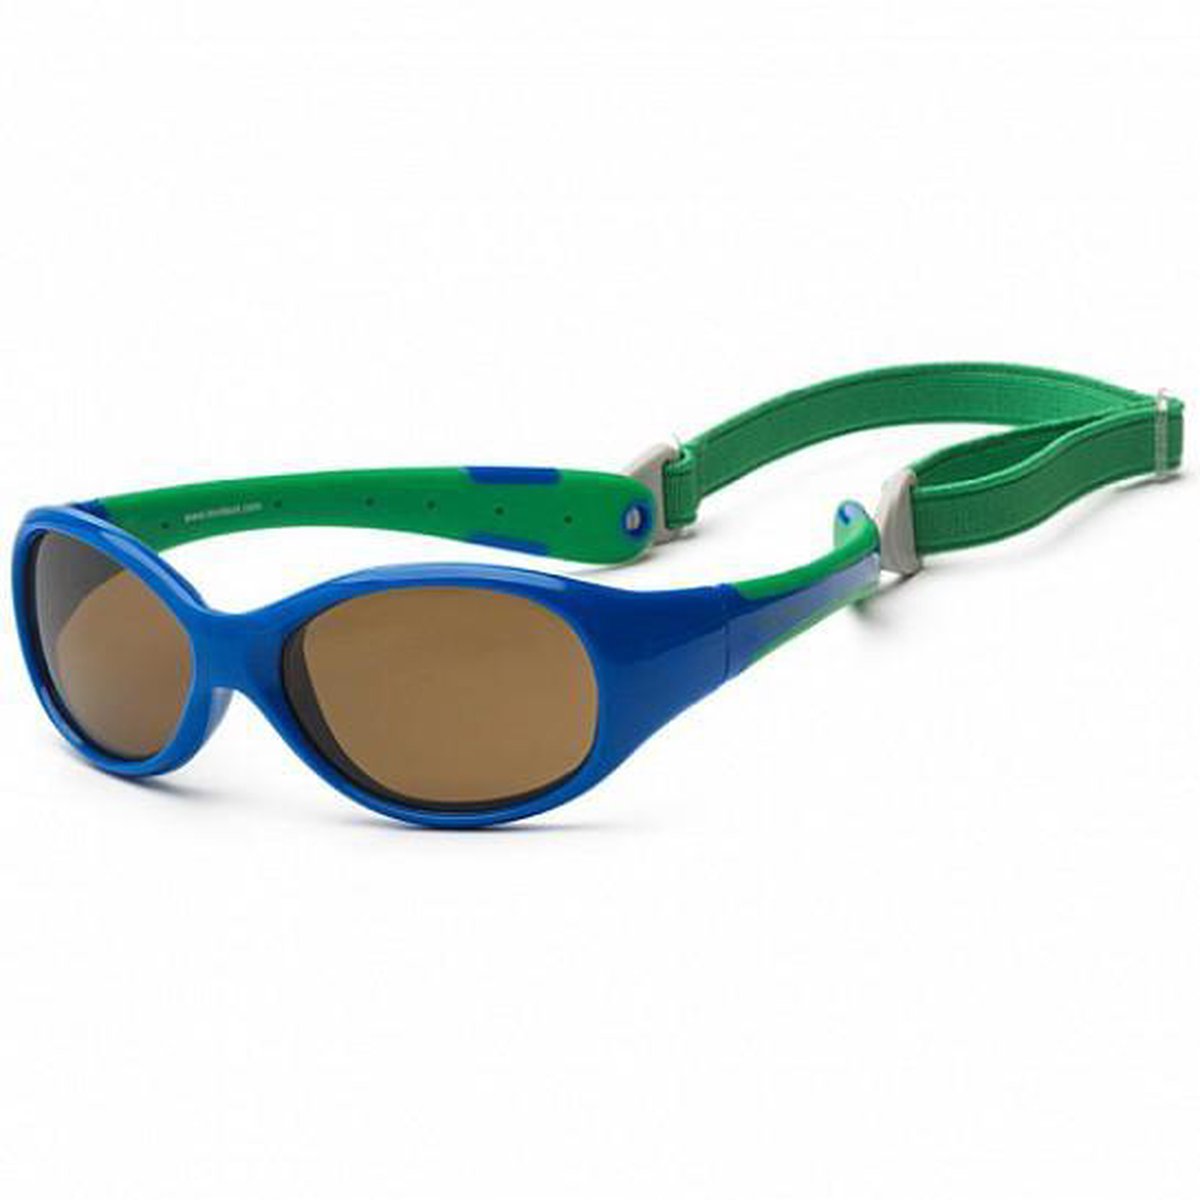 KOOLSUN - Flex - kinder zonnebril - Blauw Groen - 3-6 jaar - UV400 Categorie 3